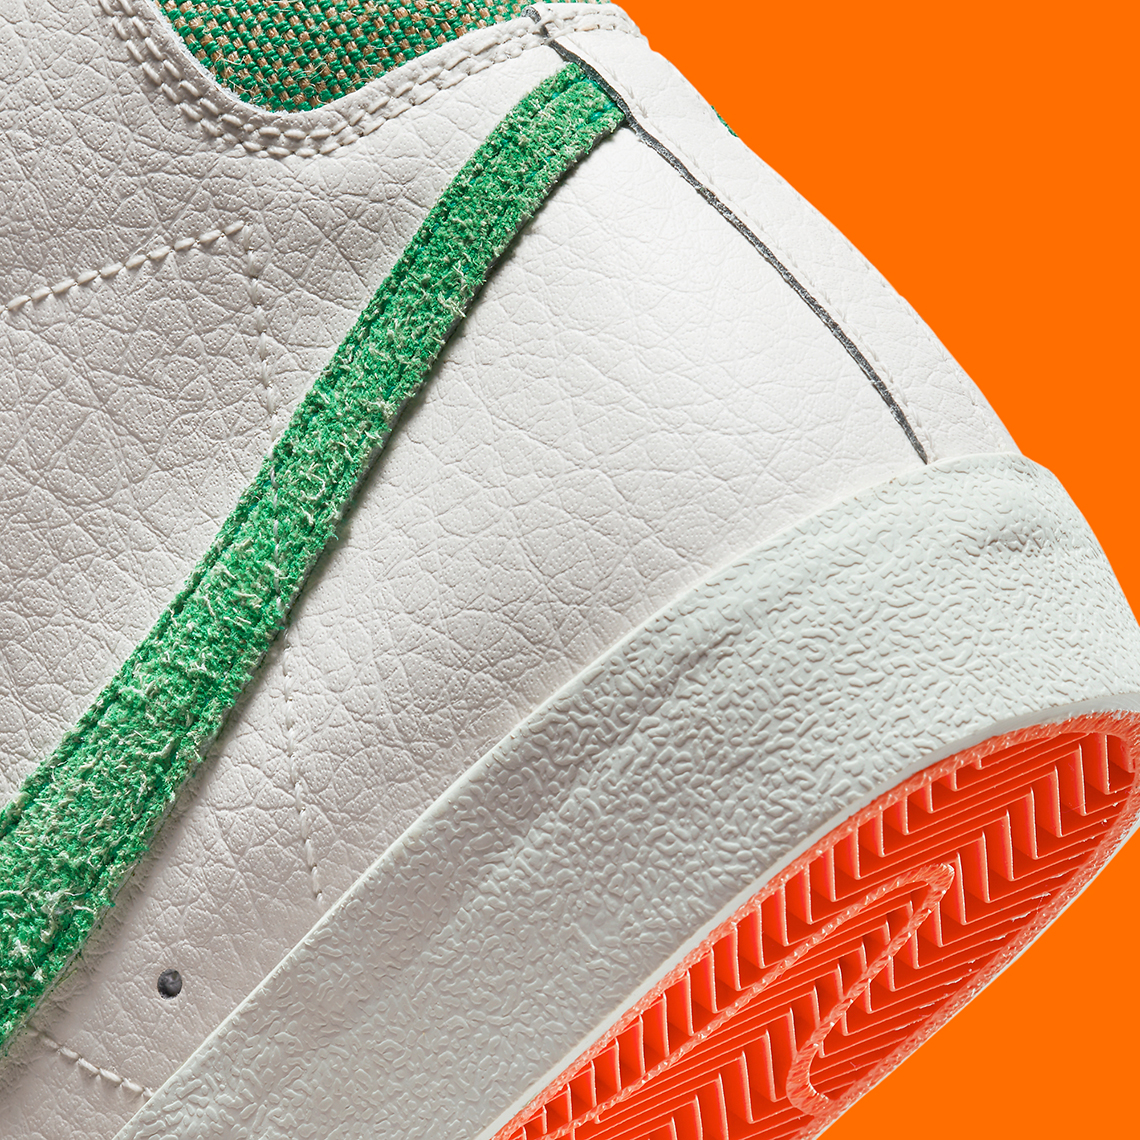 The Nike prm Dunk Low Ocean drops at 09 77 White Green Orange Fd0759 133 1